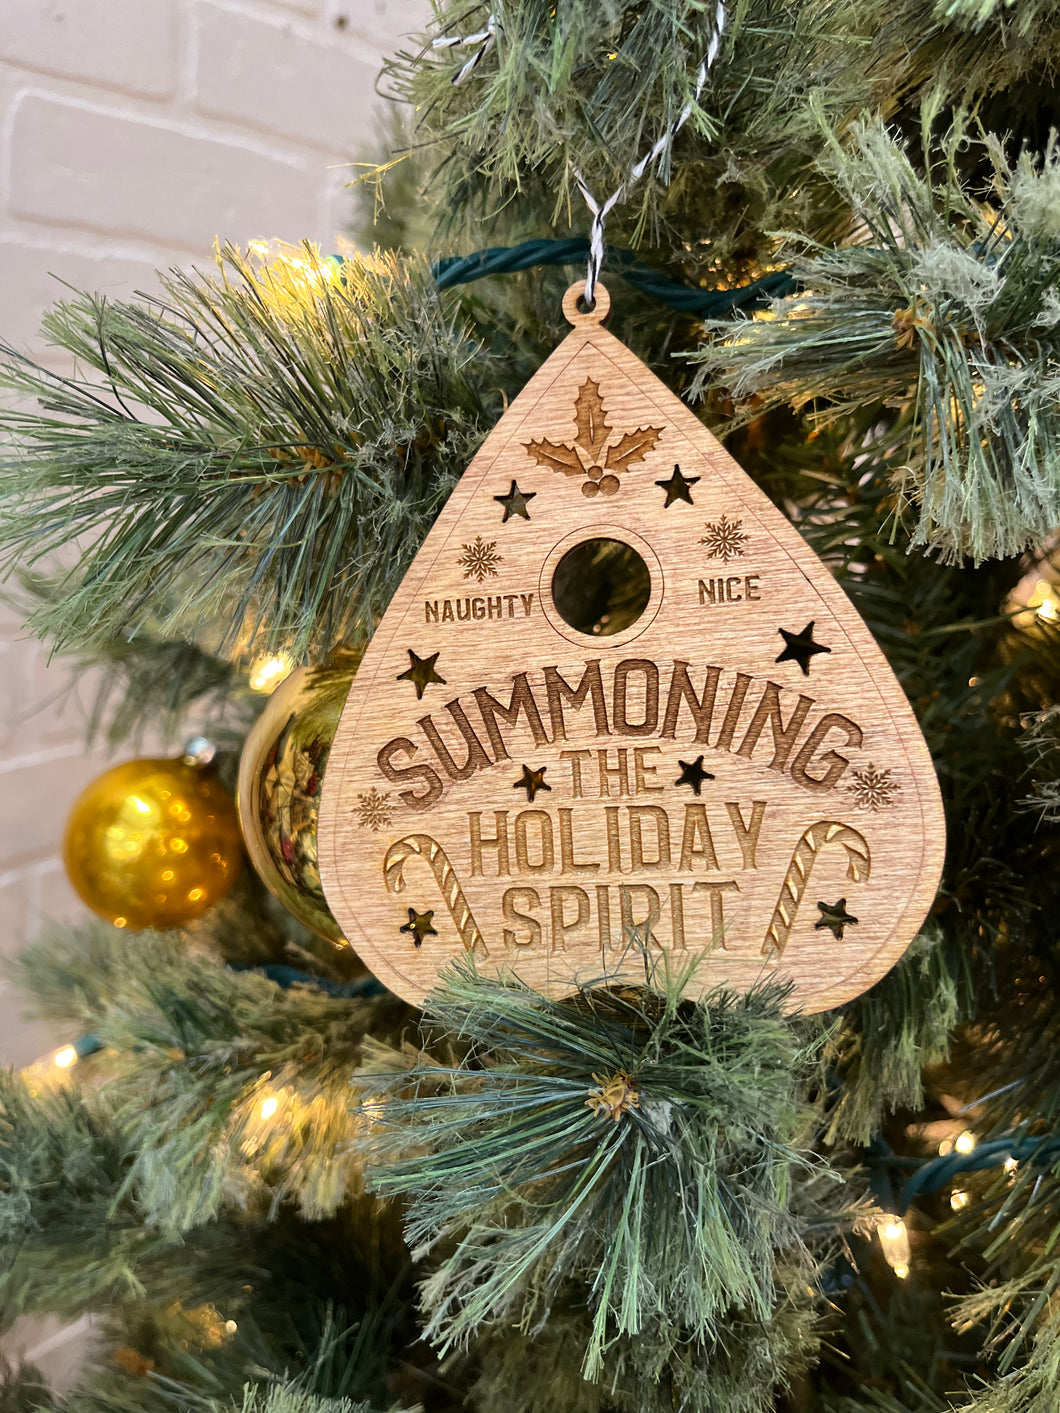 Summing the Holiday Spirit Ornament